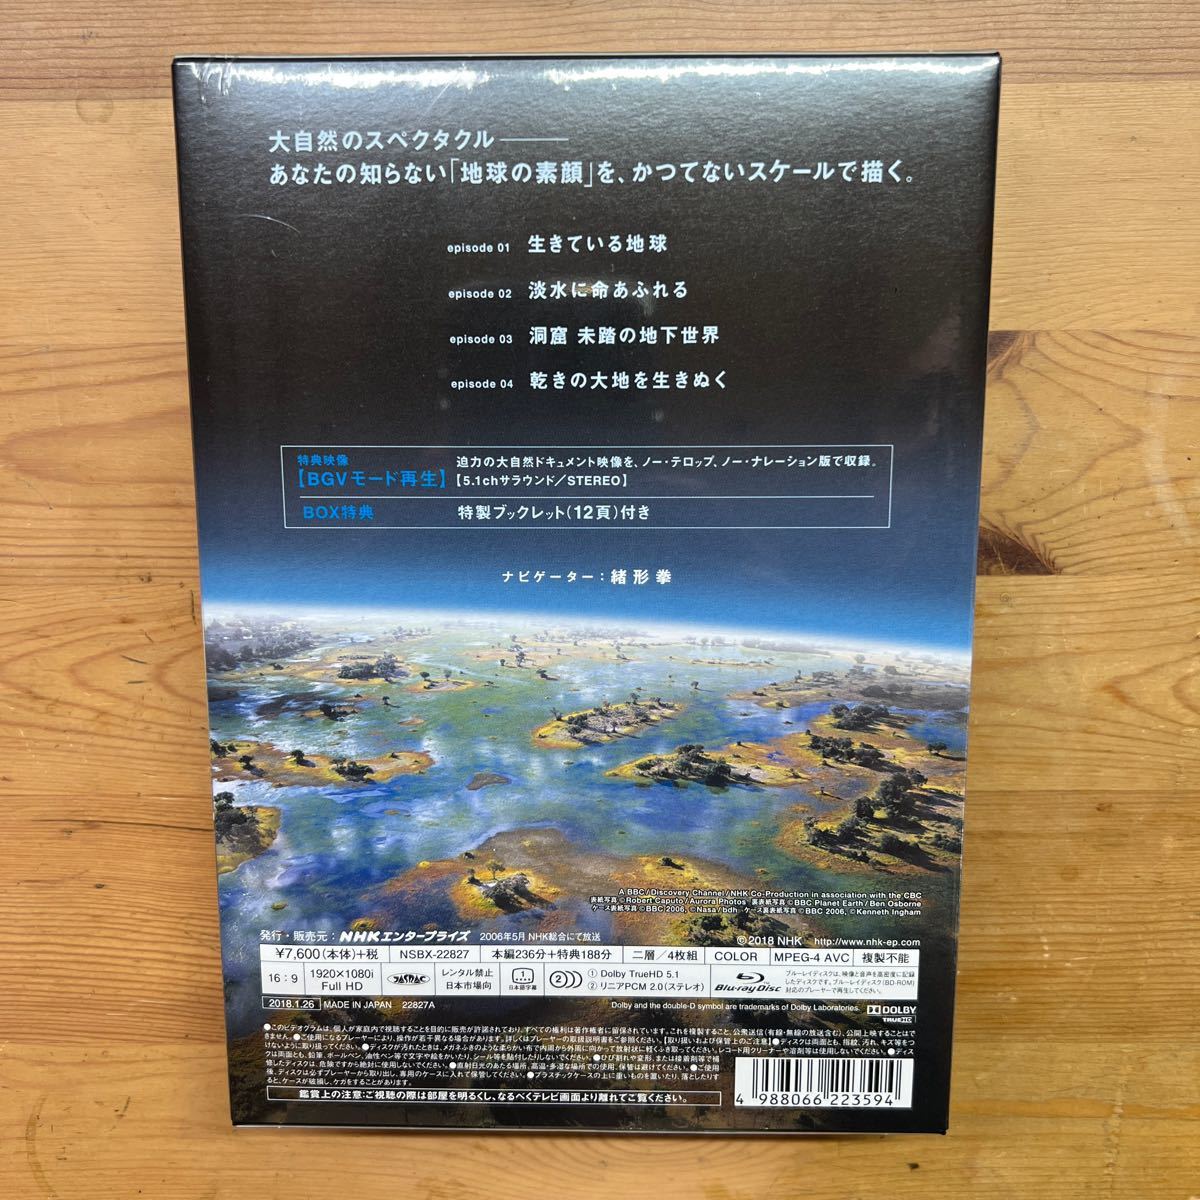 NHKスペシャル プラネットアース ブルーレイ BOX 1 [Blu-ray]